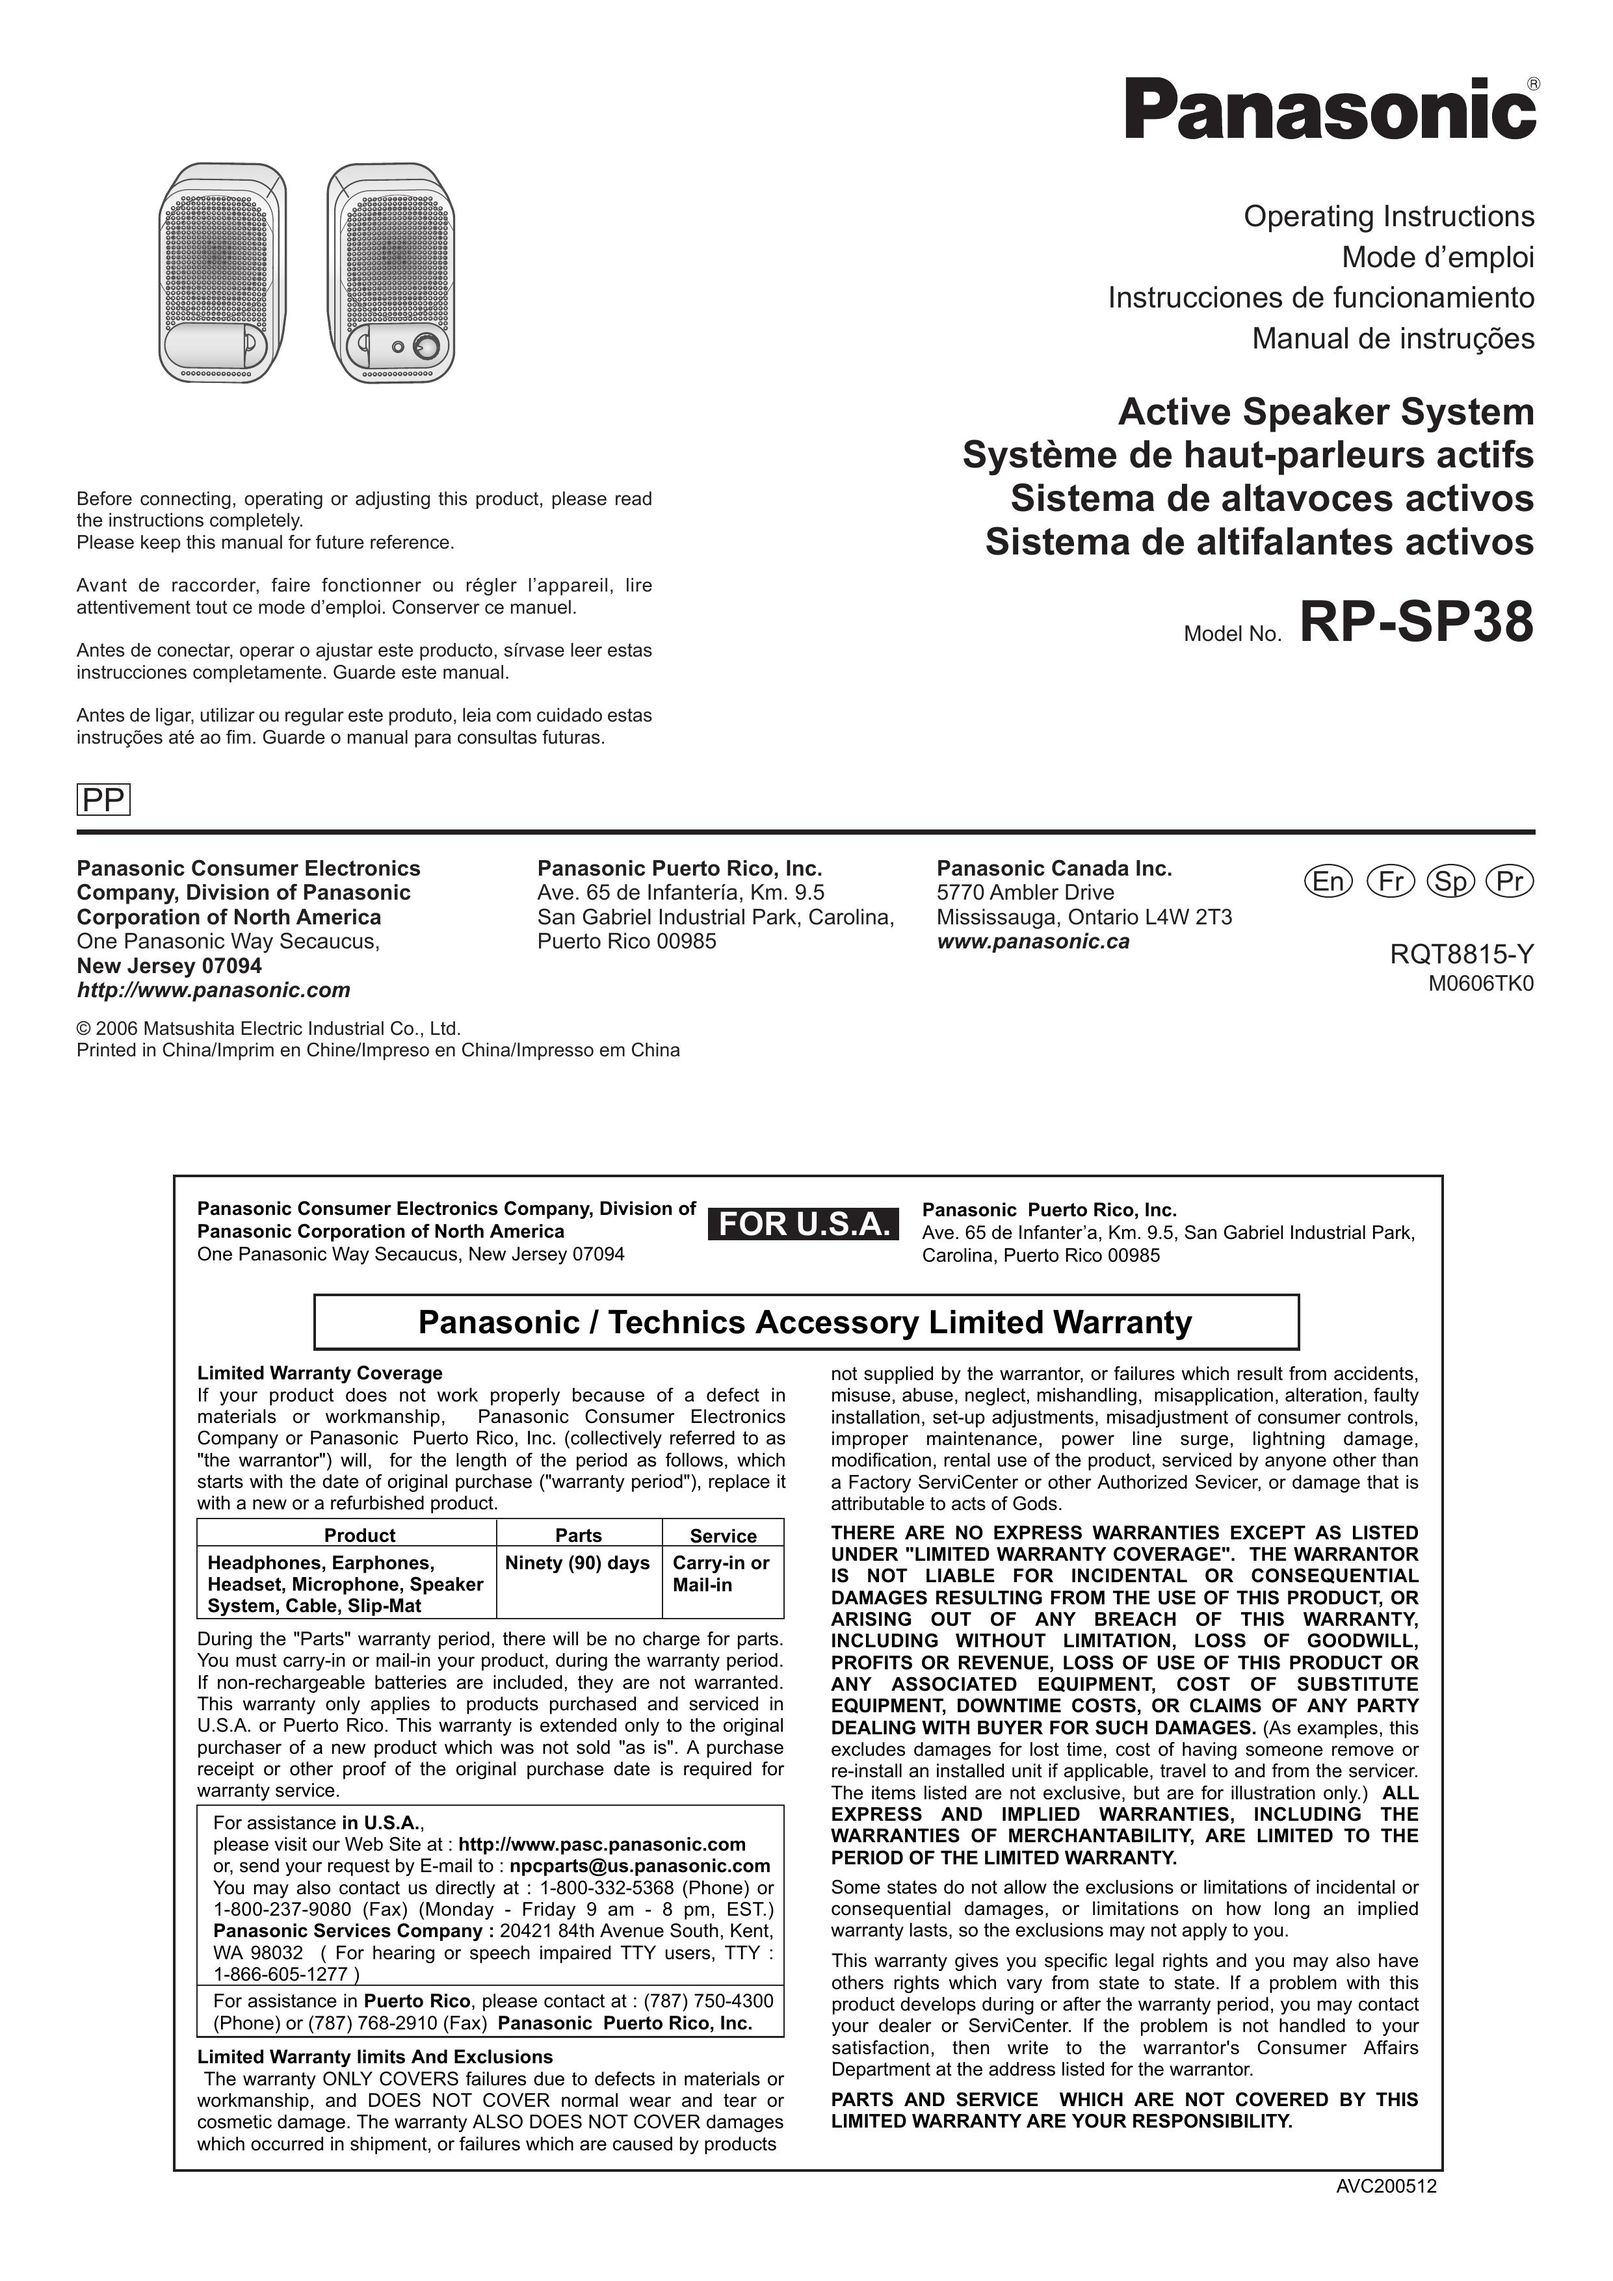 Panasonic RP-SP38 Portable Speaker User Manual